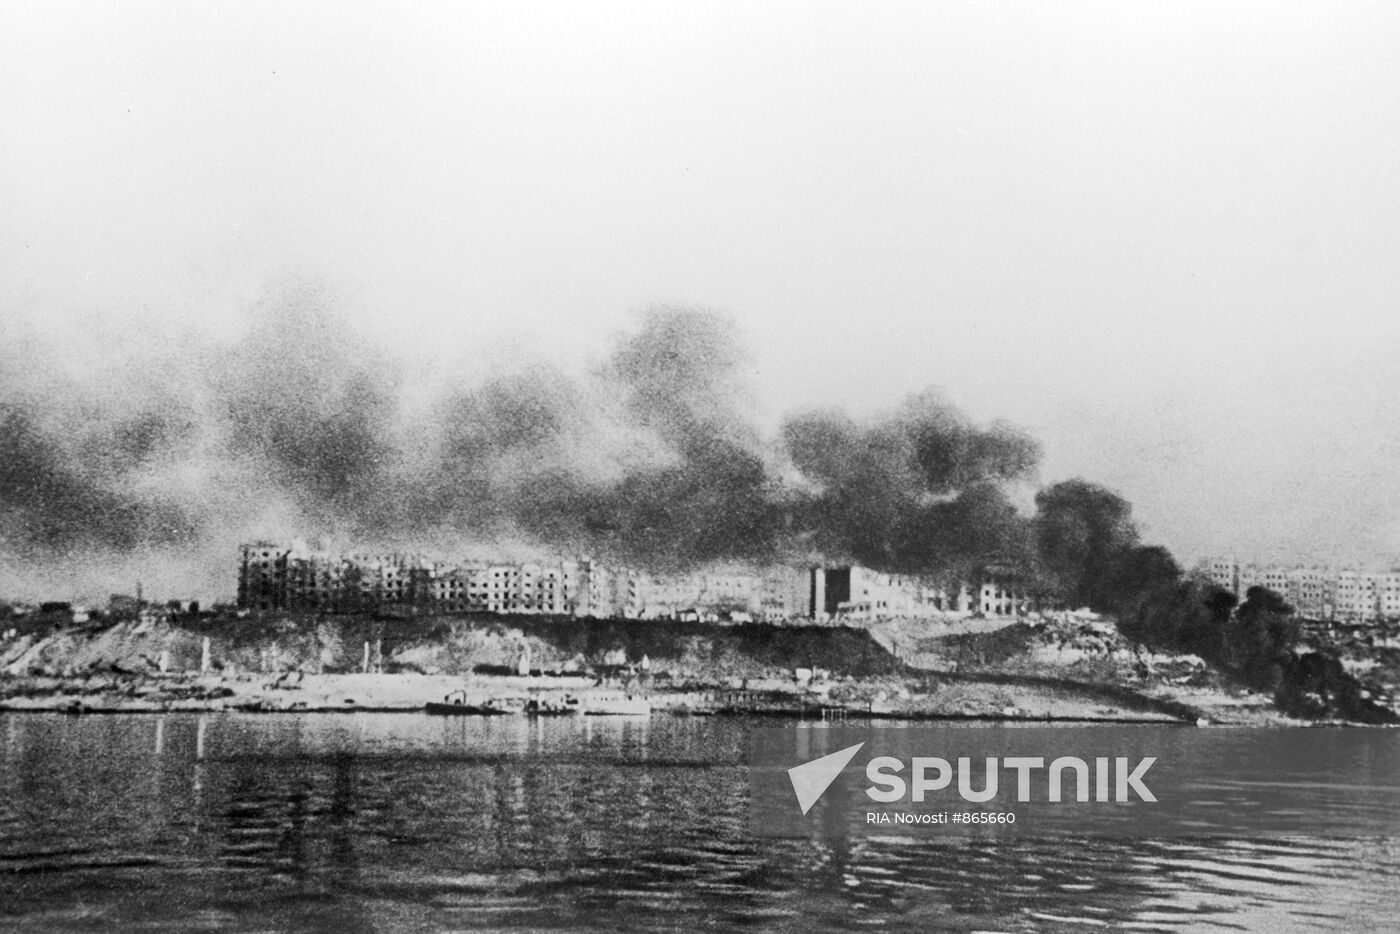 Stalingrad on fire